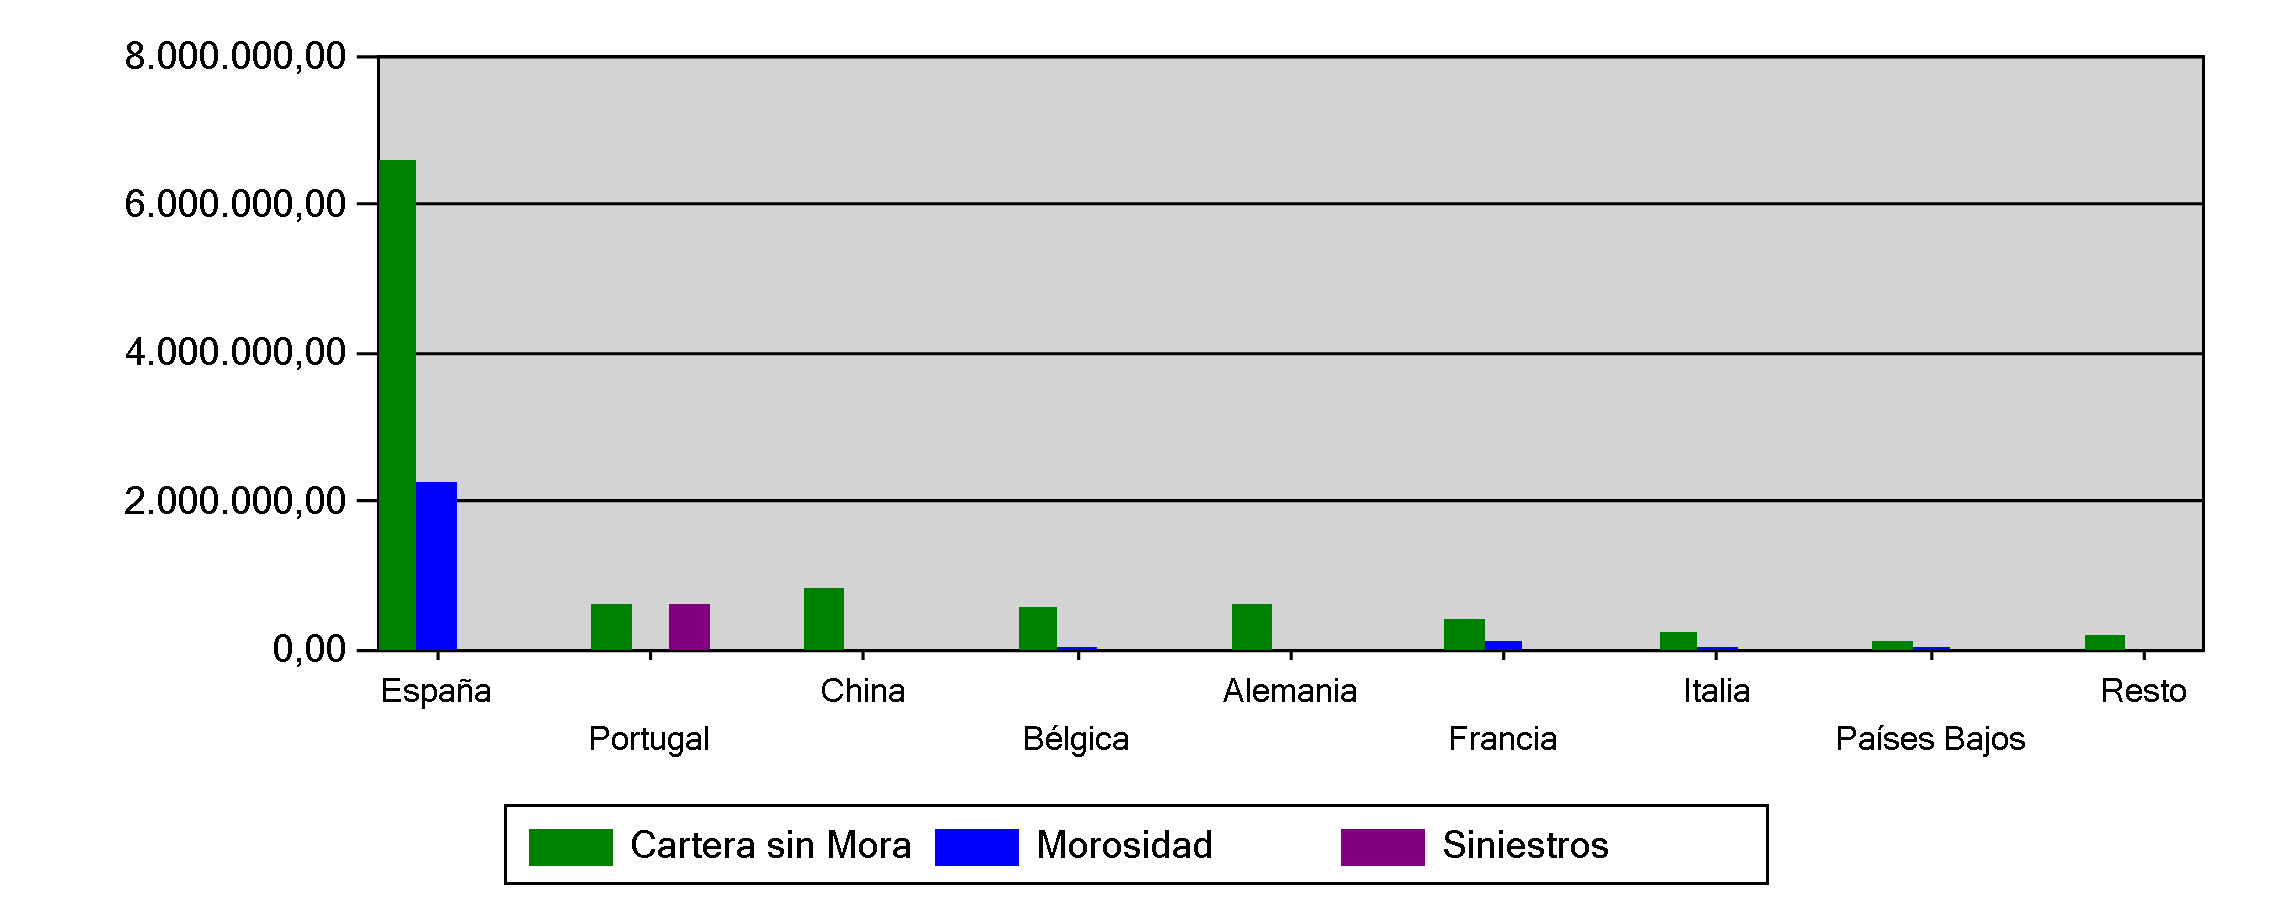 Distribución por País del Deudor ( ) ( ) España 144 177 0 6.587.121 2.287.961 0 Portugal 23 0 140 619.800 0 614.280 China 2 0 0 824.366 0 0 Bélgica 21 8 0 585.